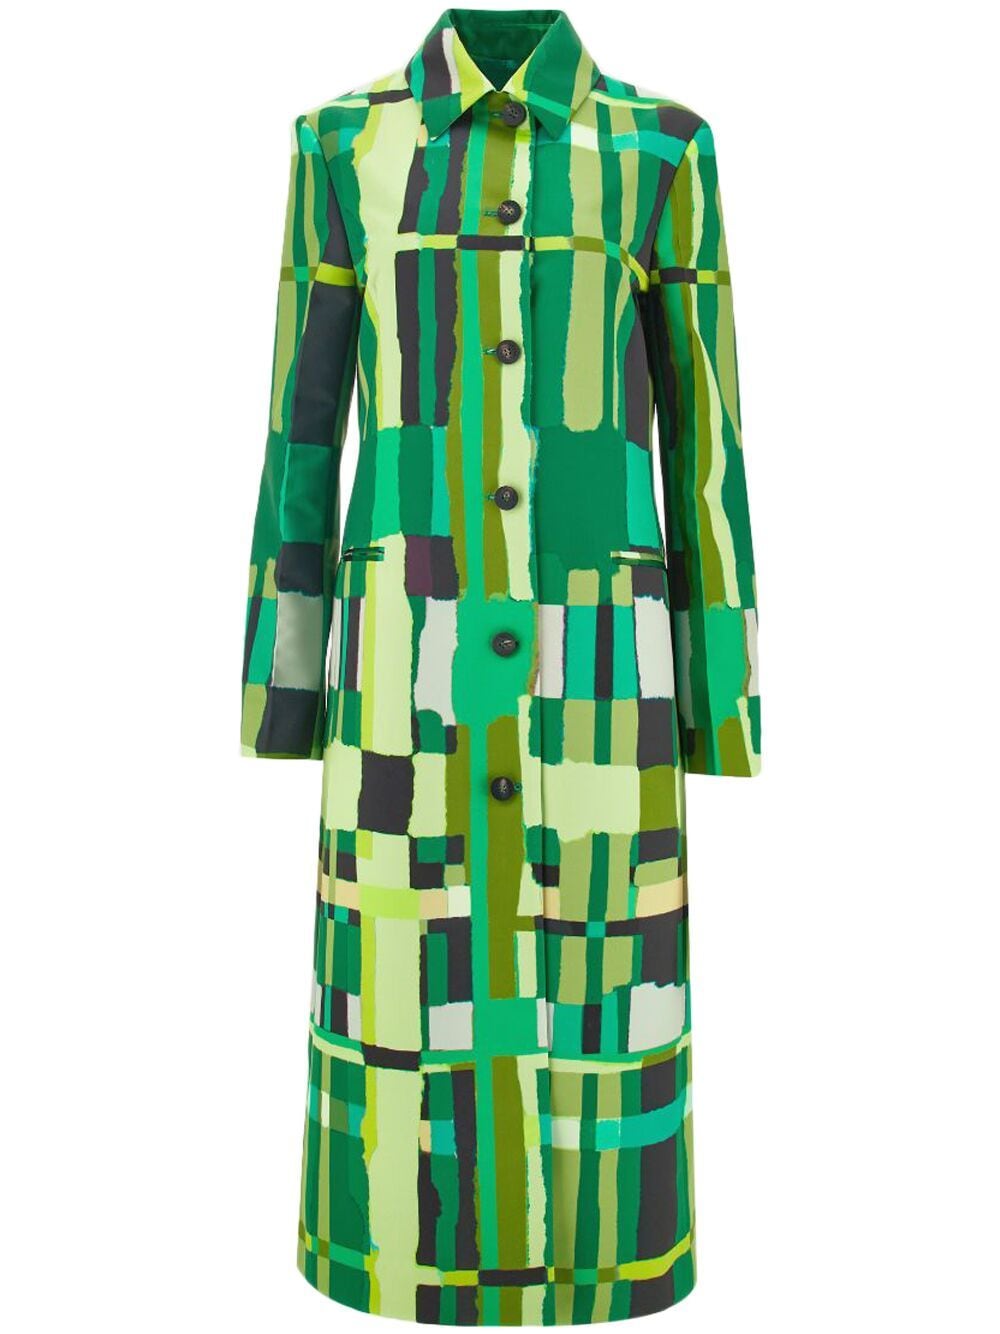 Ferragamo abstract-print single-breasted coat - Green